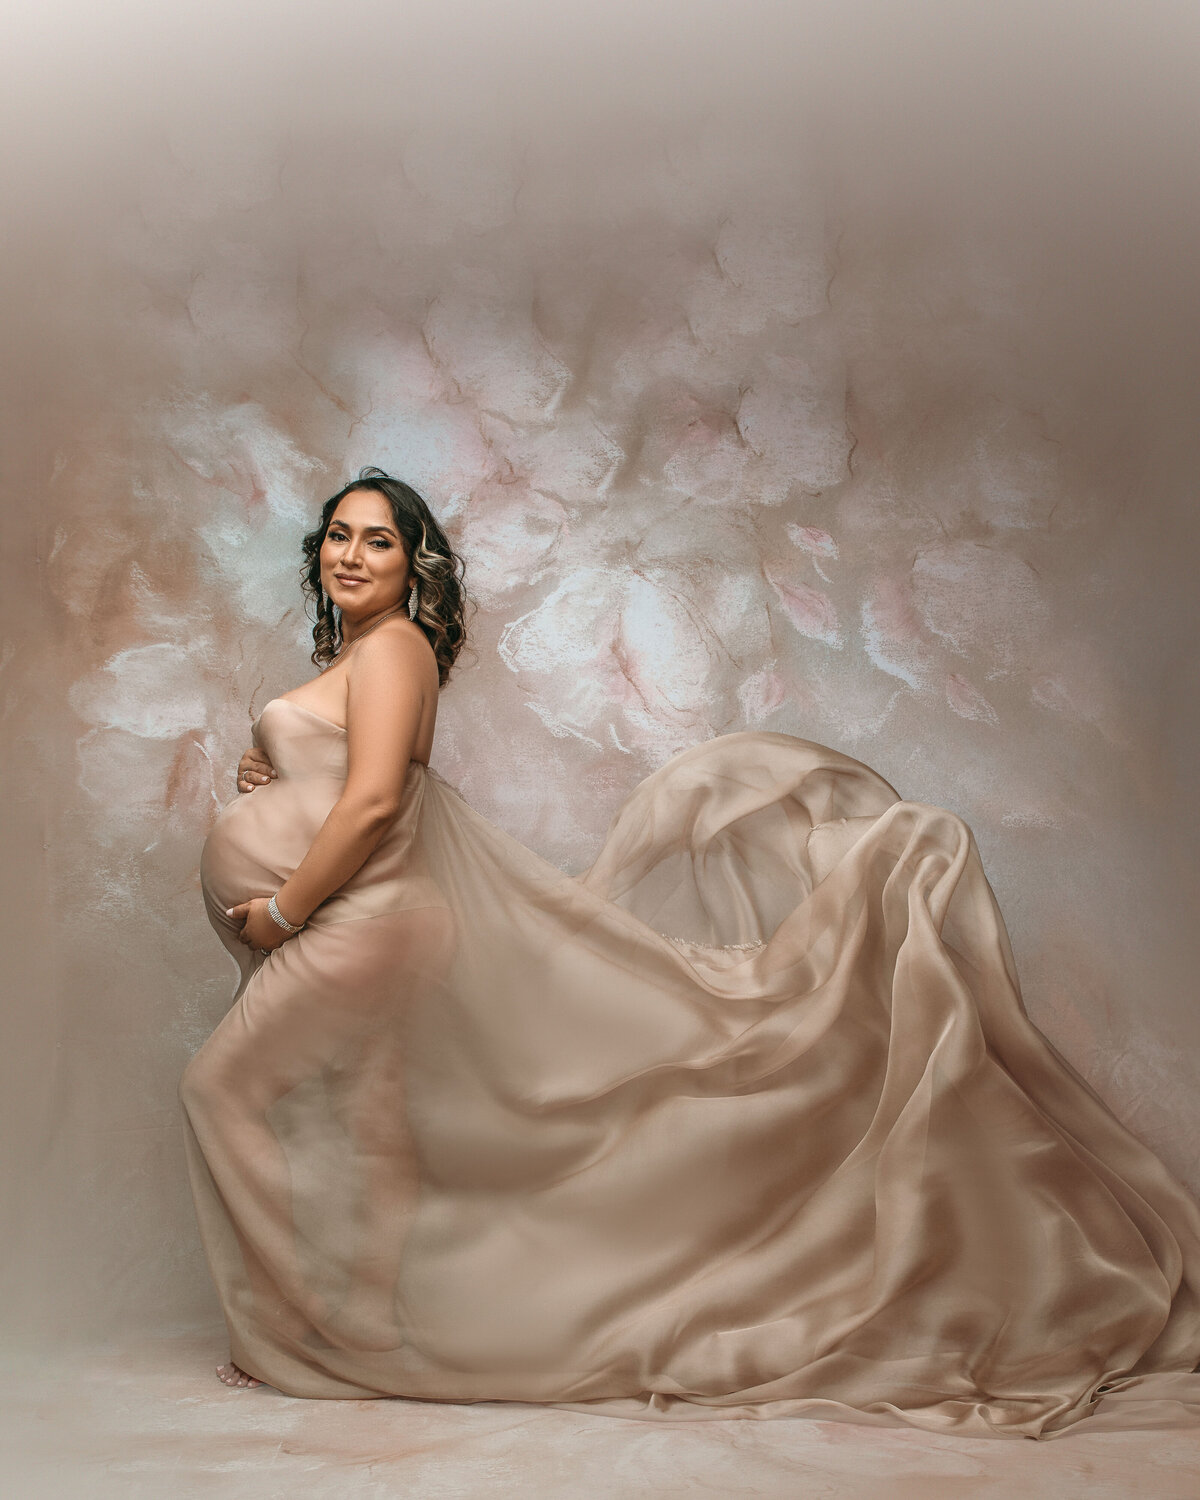 34 weeks pregnant woman posing in portrait studio wearing cream chiffon fabric flowing behind her